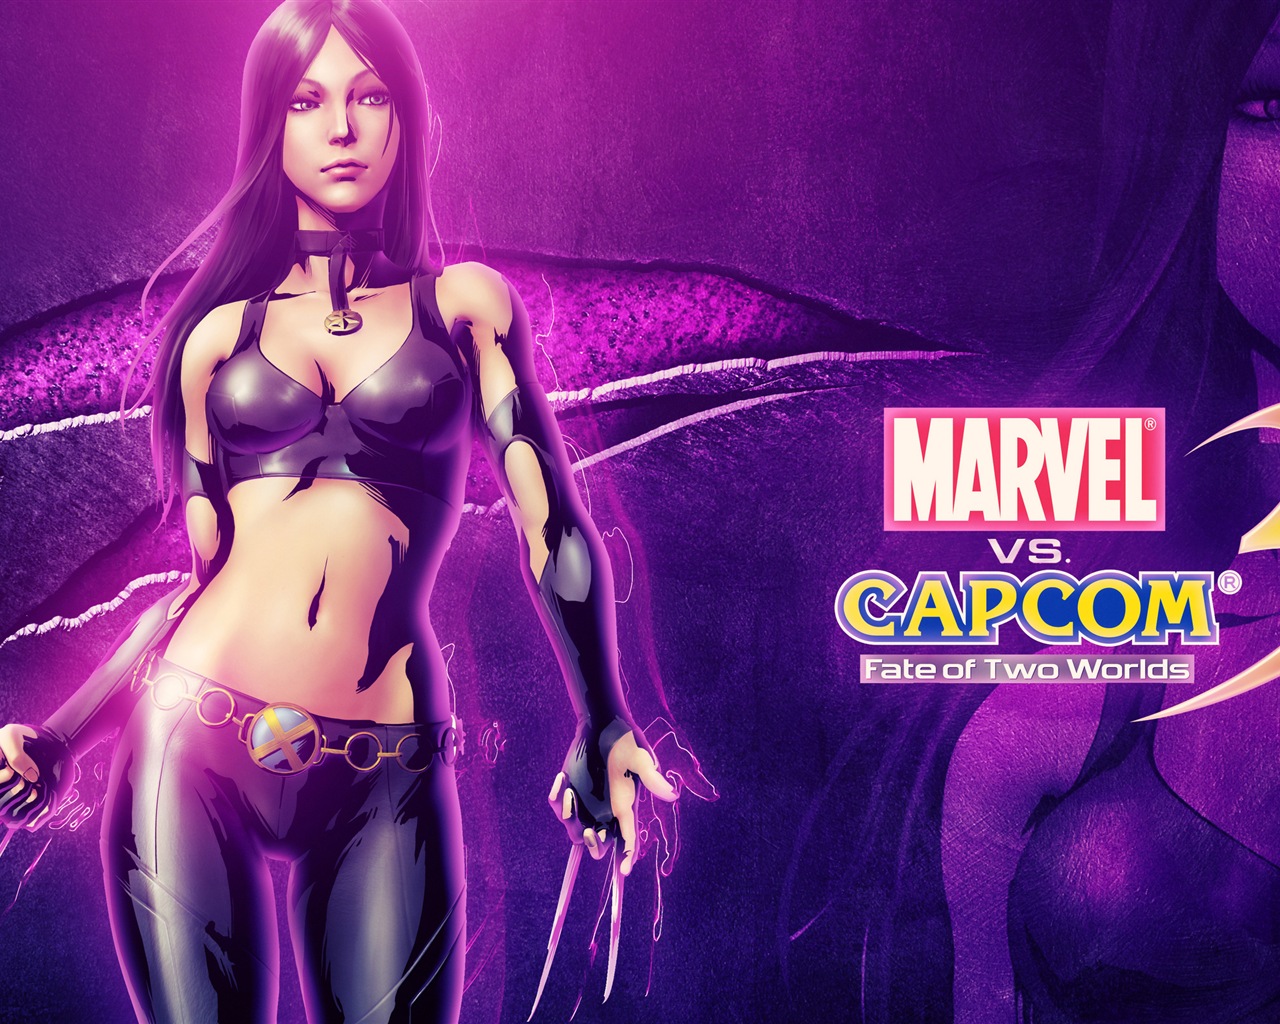 Marvel VS. Capcom 3: Fate of Two Worlds 漫畫英雄VS.卡普空3 高清遊戲壁紙 #10 - 1280x1024